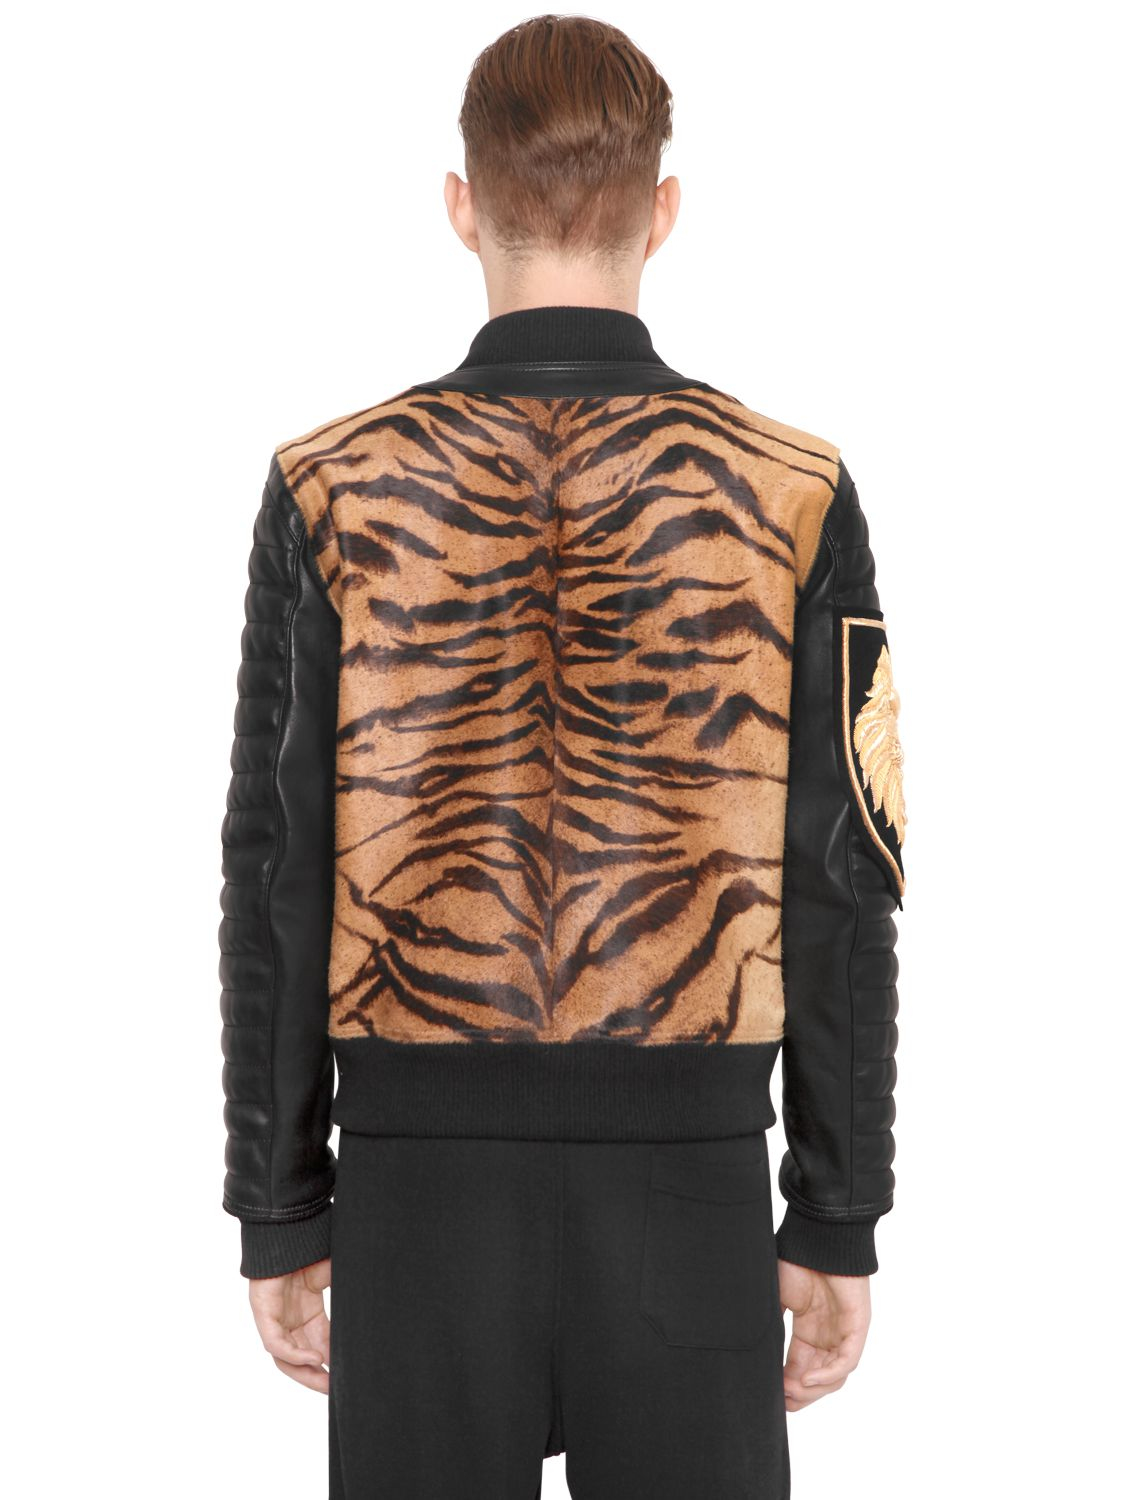 Lyst - Balmain Tiger Ponyskin & Leather Bomber Jacket in Natural for Men